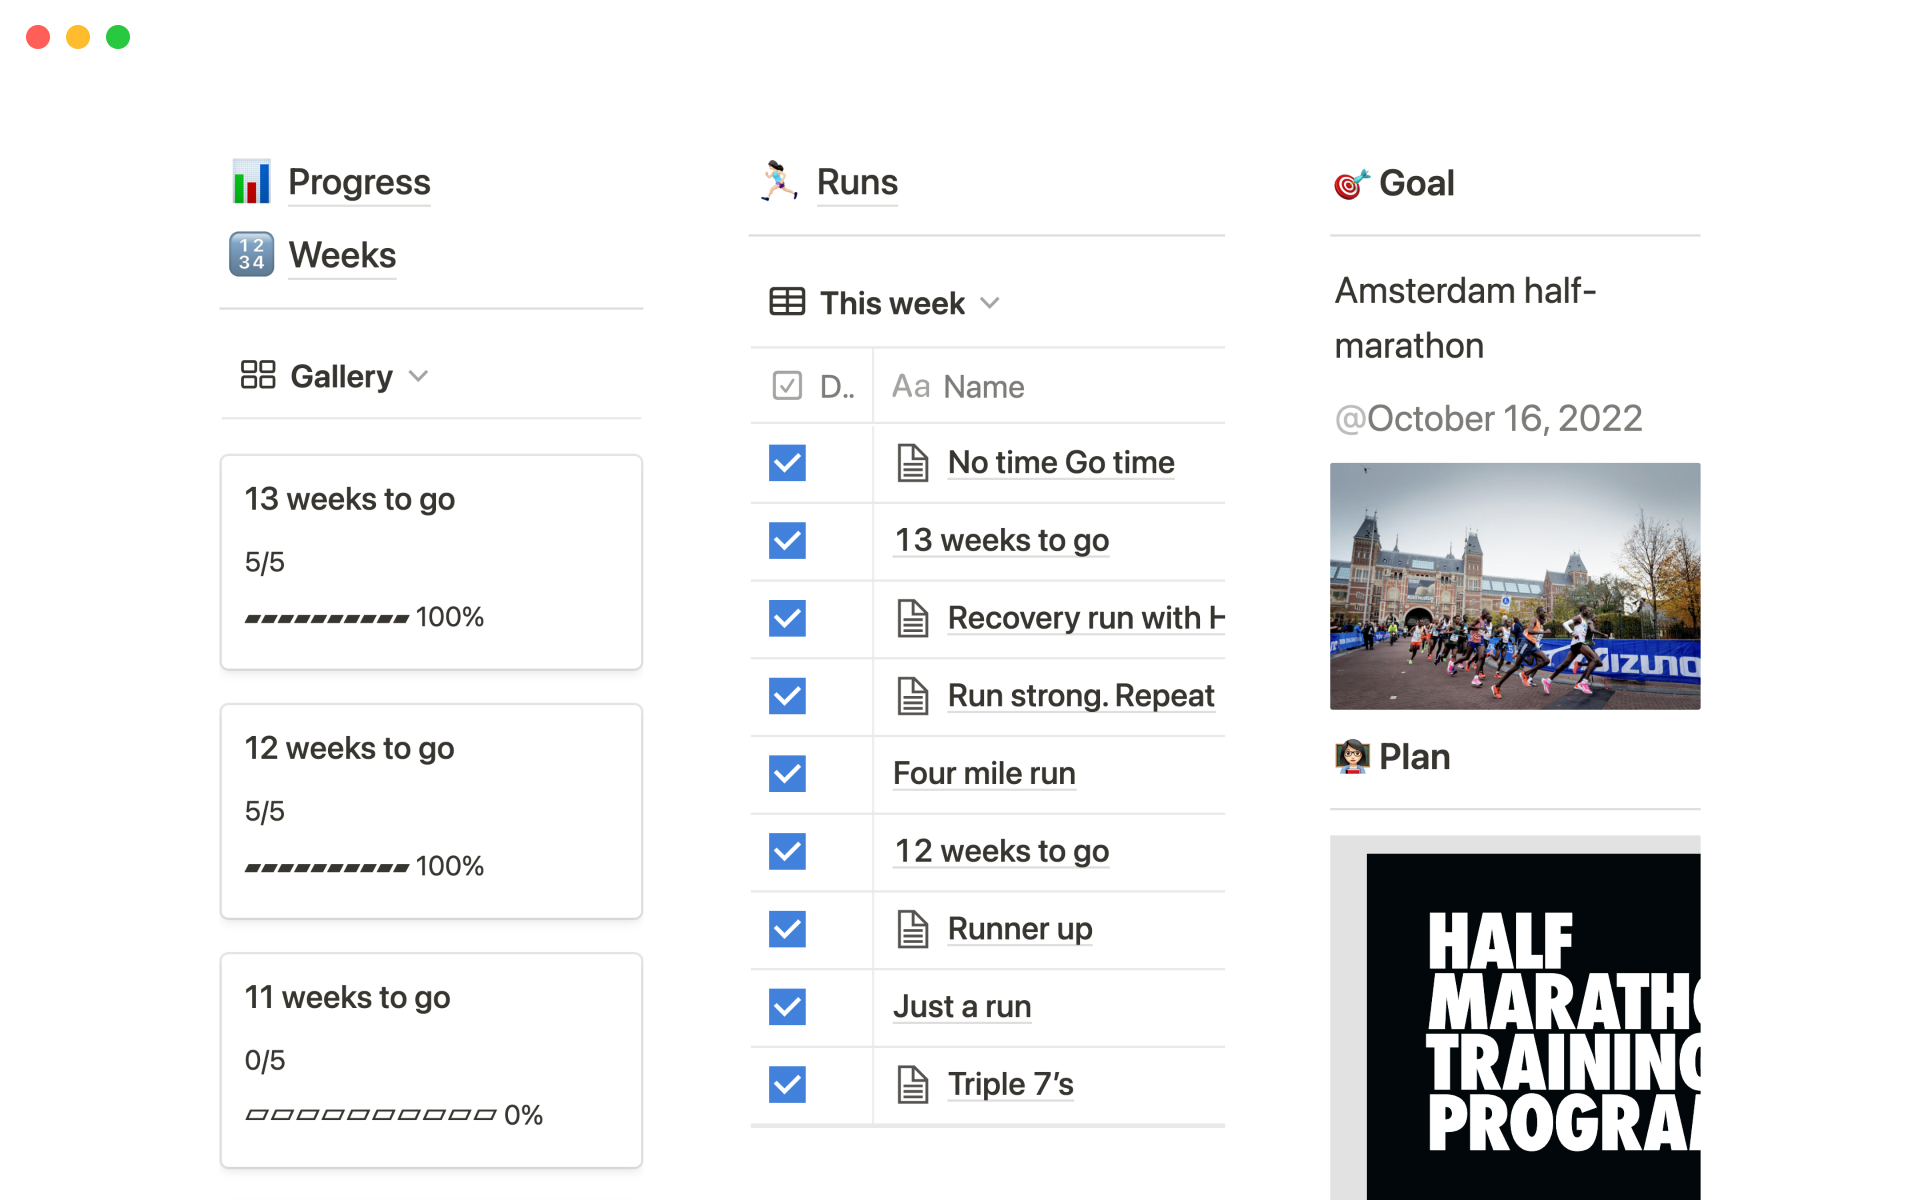 Keep track of the progress during the Nike Running Club 14 weeks half-marathon training plan.